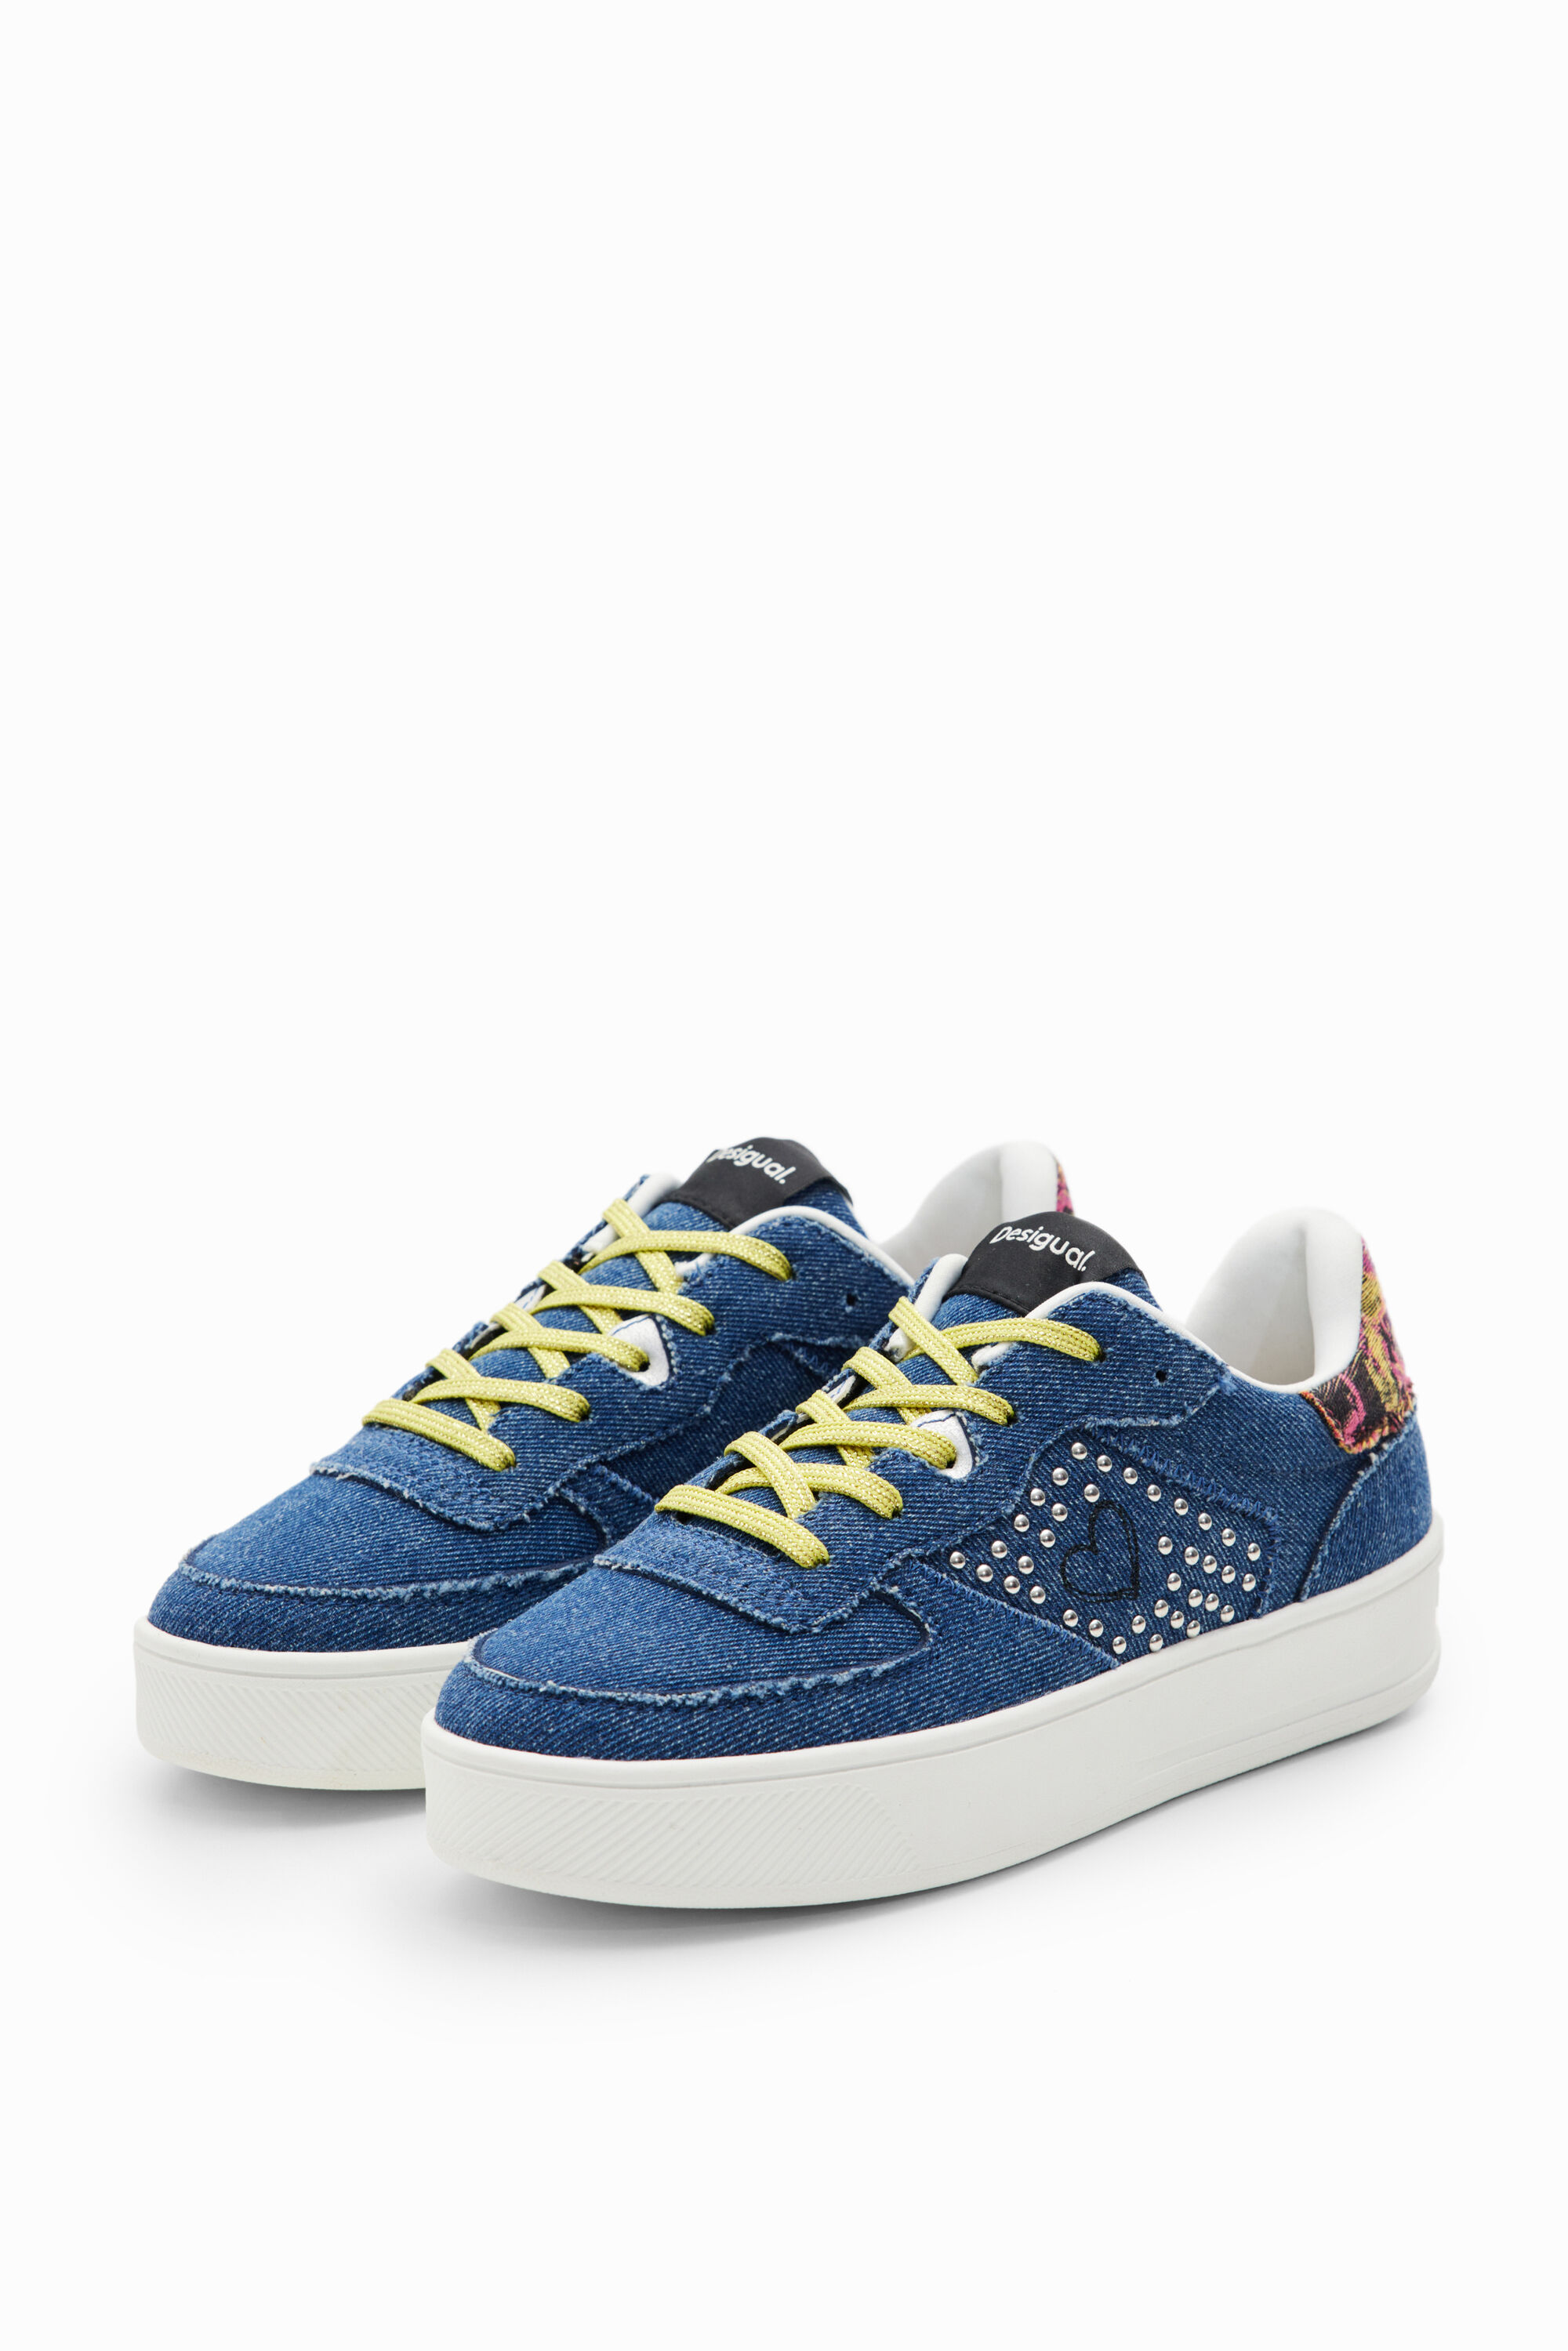 Denim heart platform sneakers - BLUE - 41